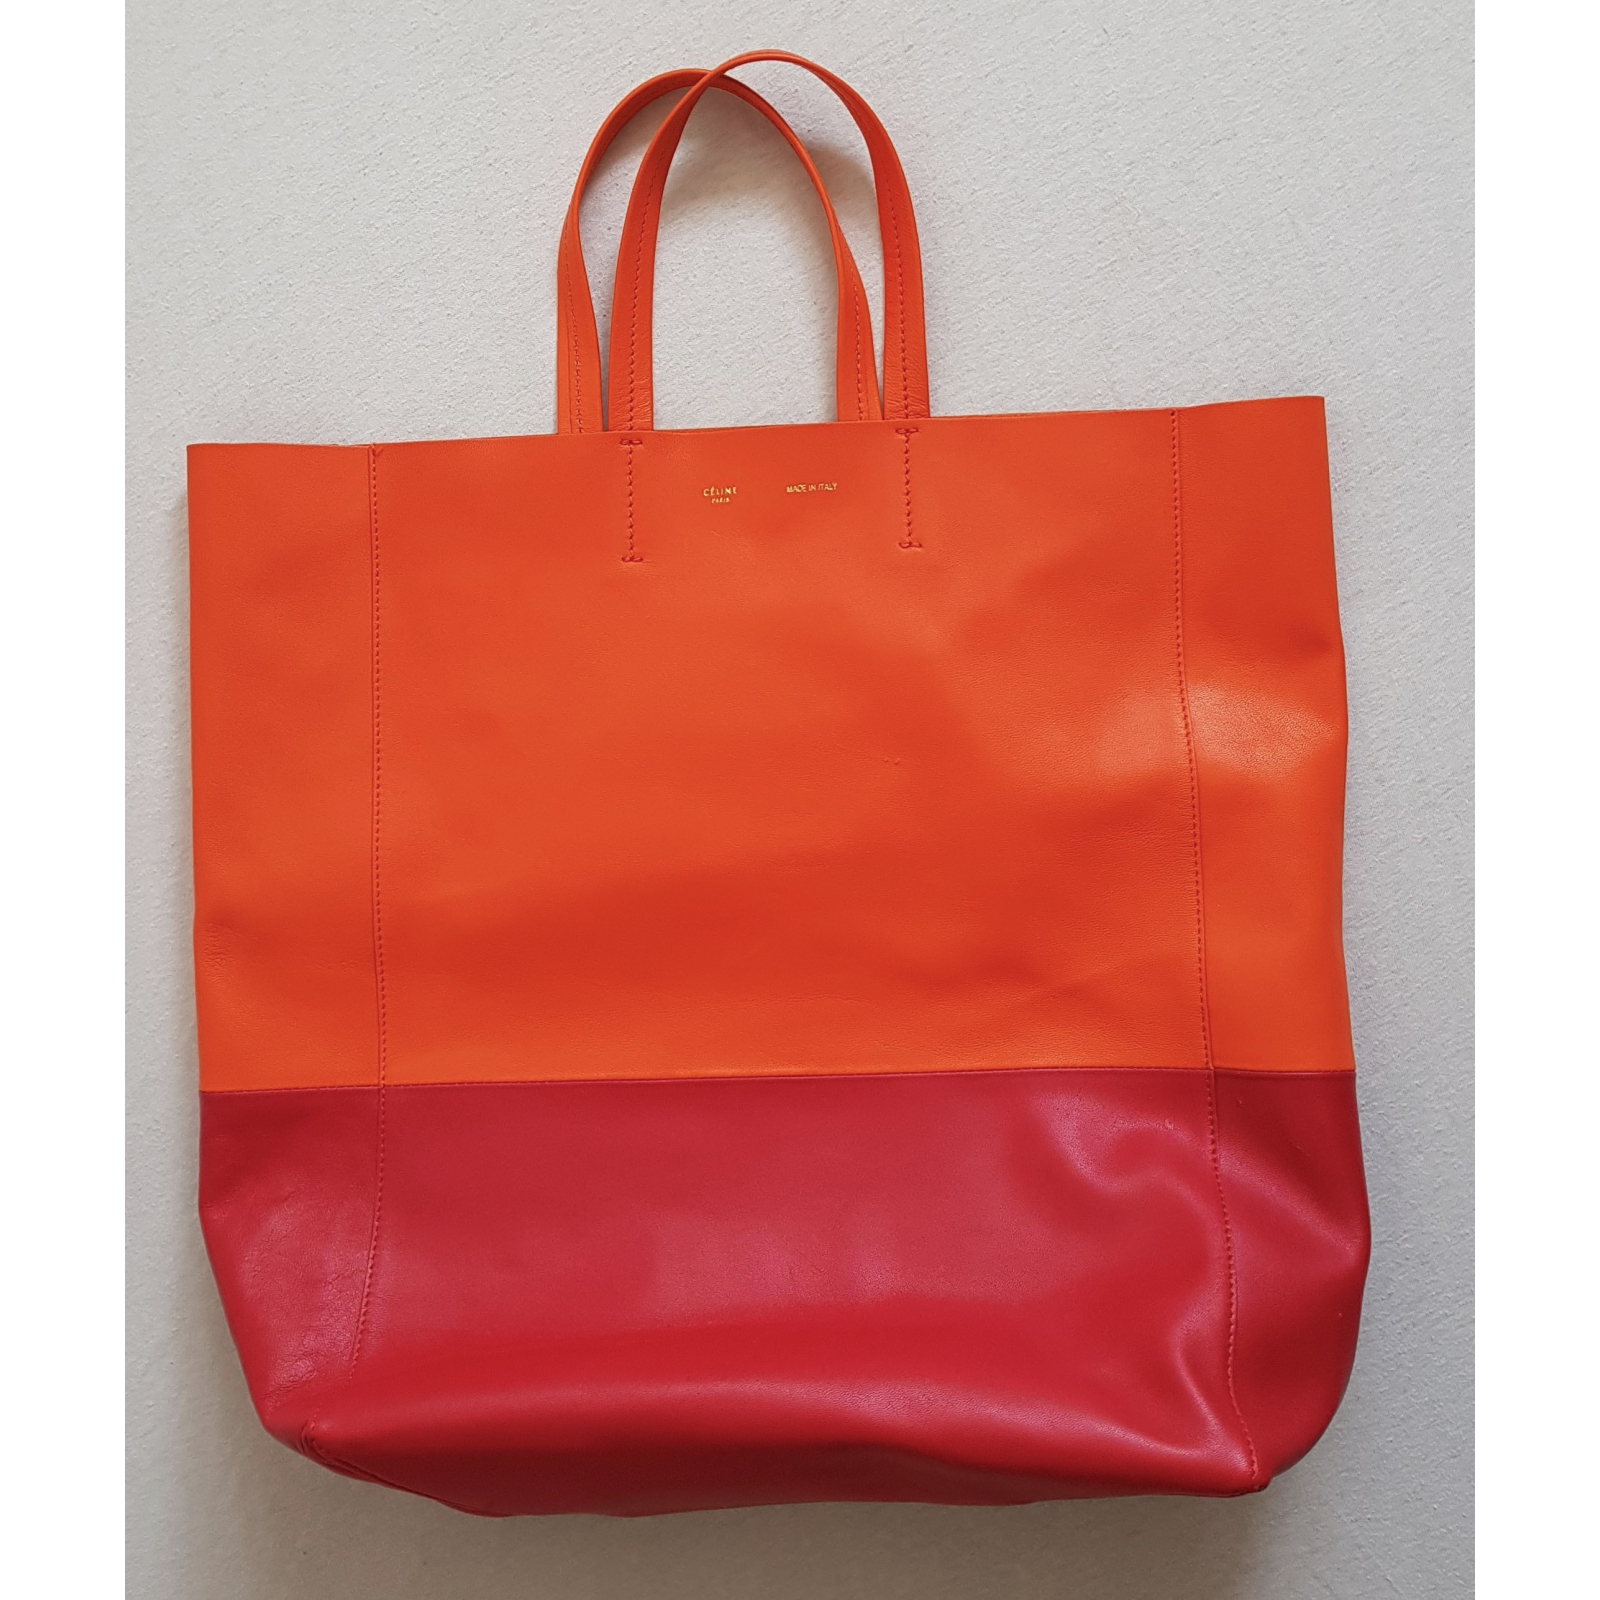 Celine cabas bicolored leather tote, pomarańczowa